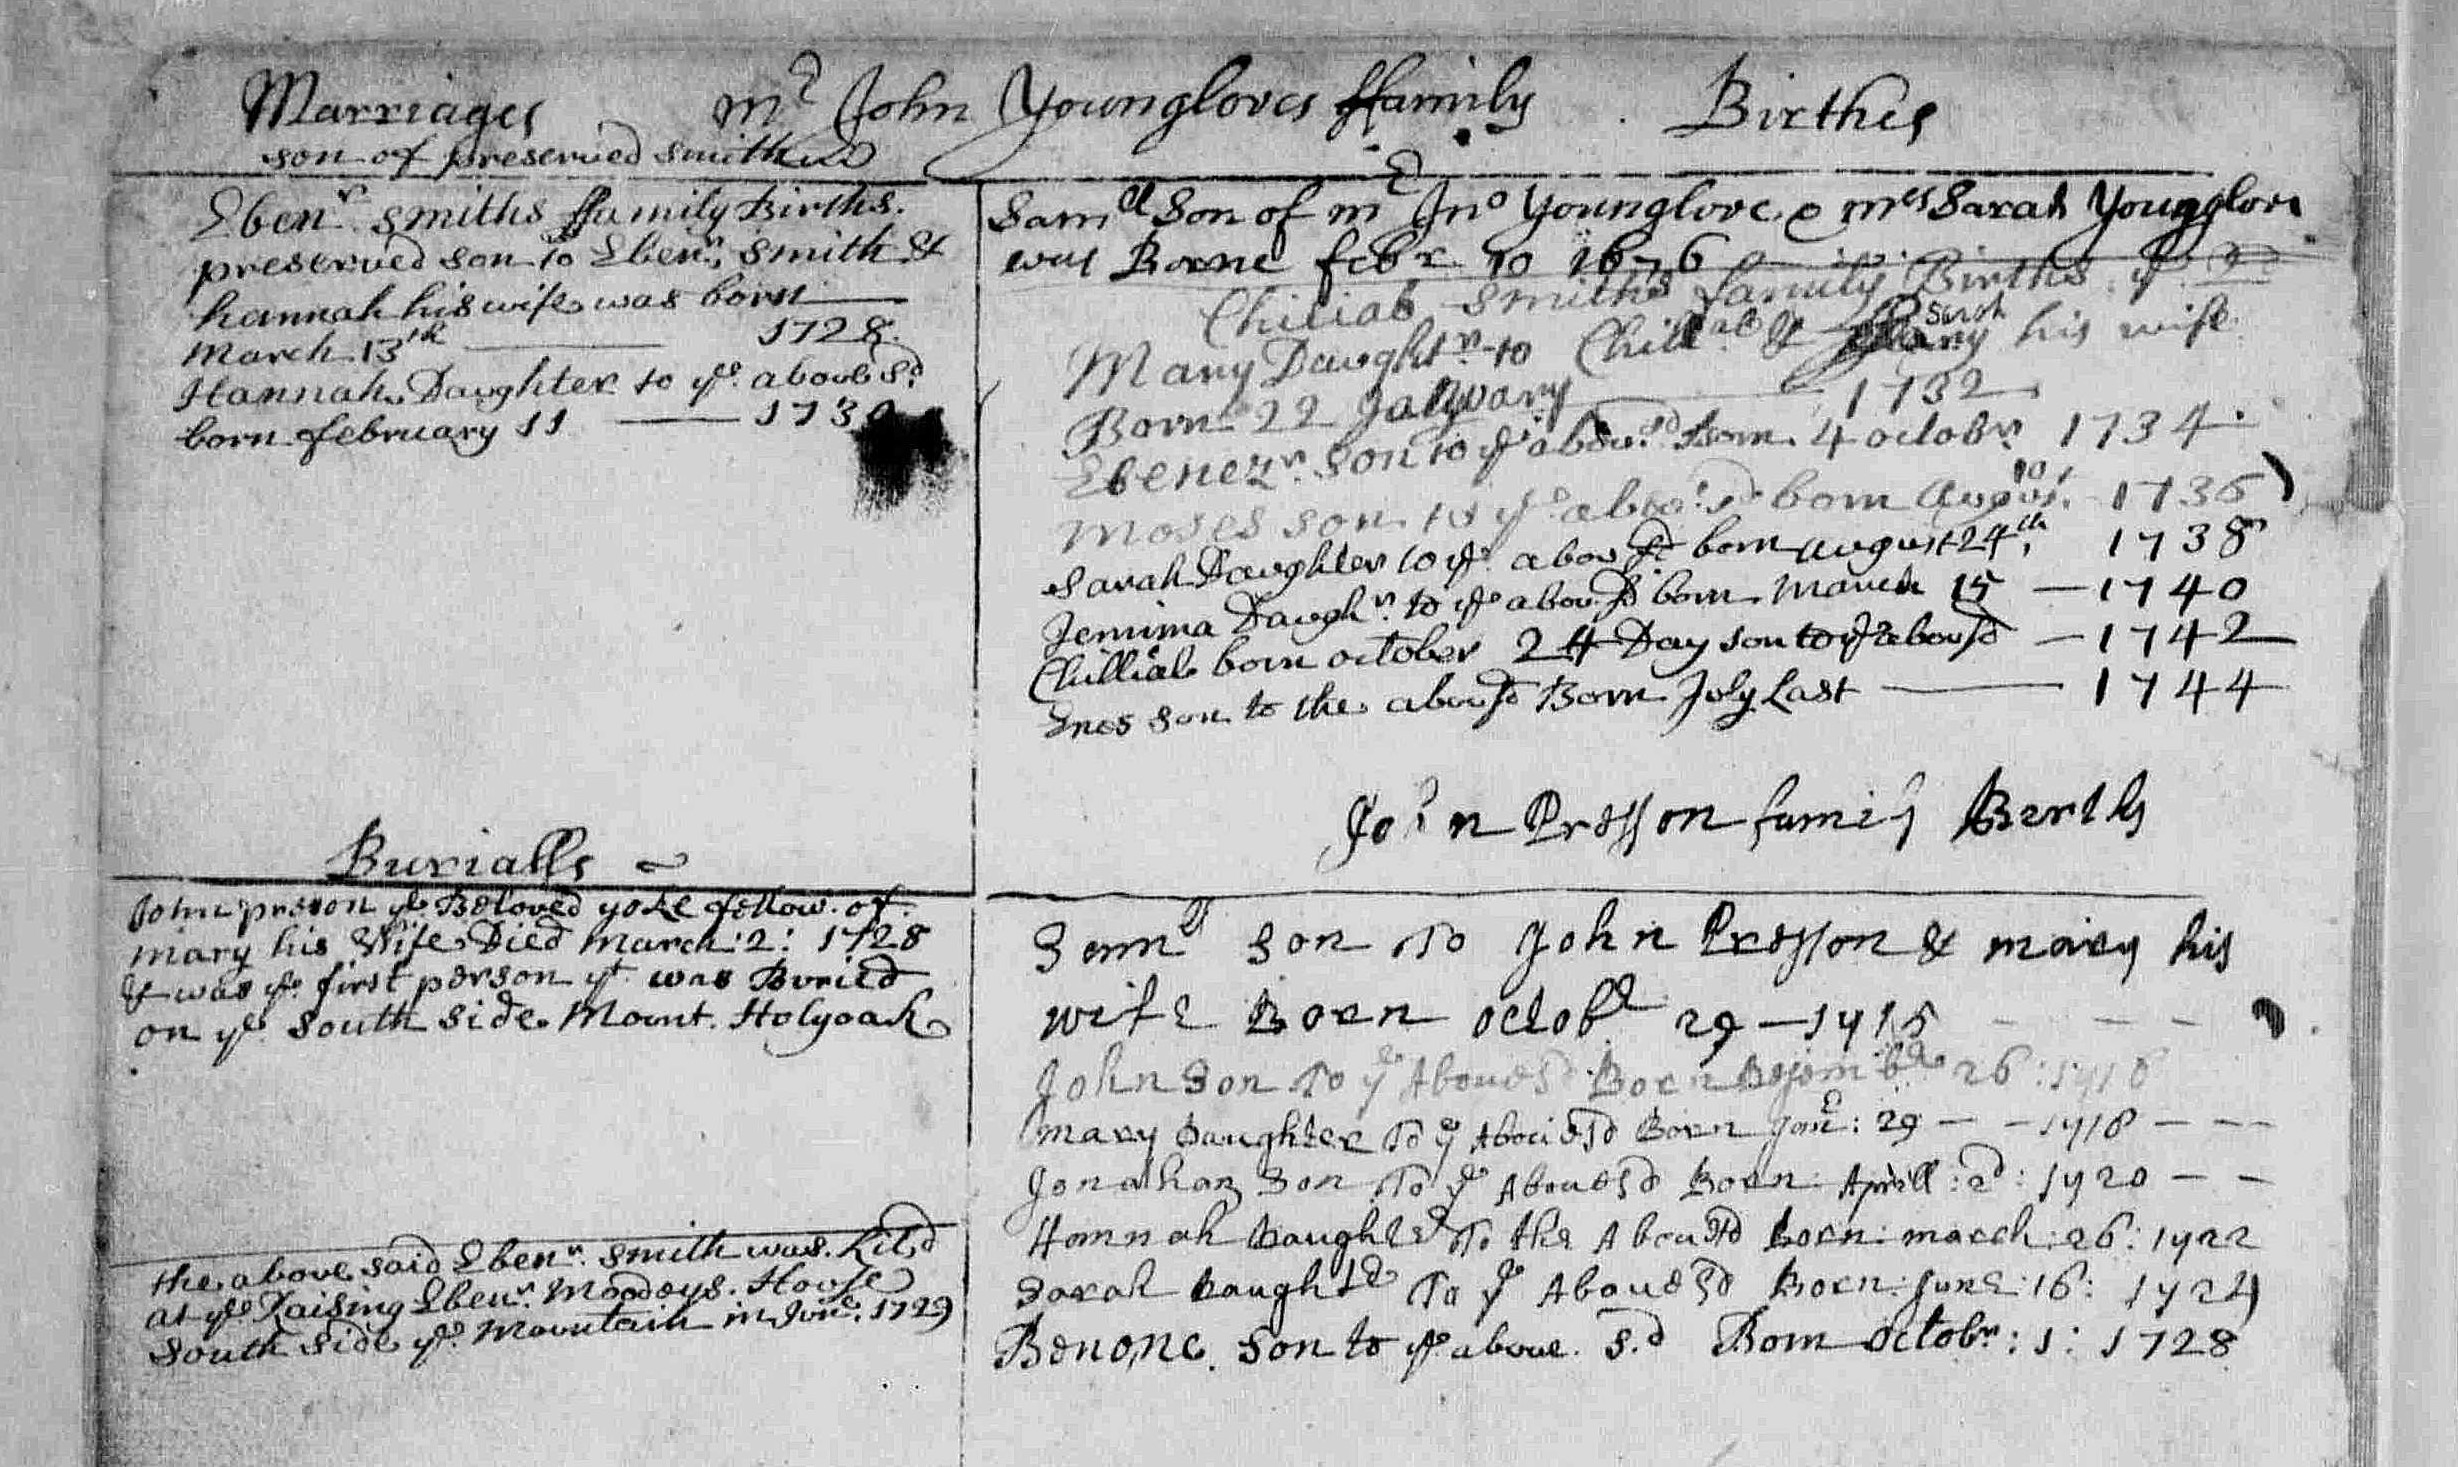 Family and death record of Ebenezer Smith